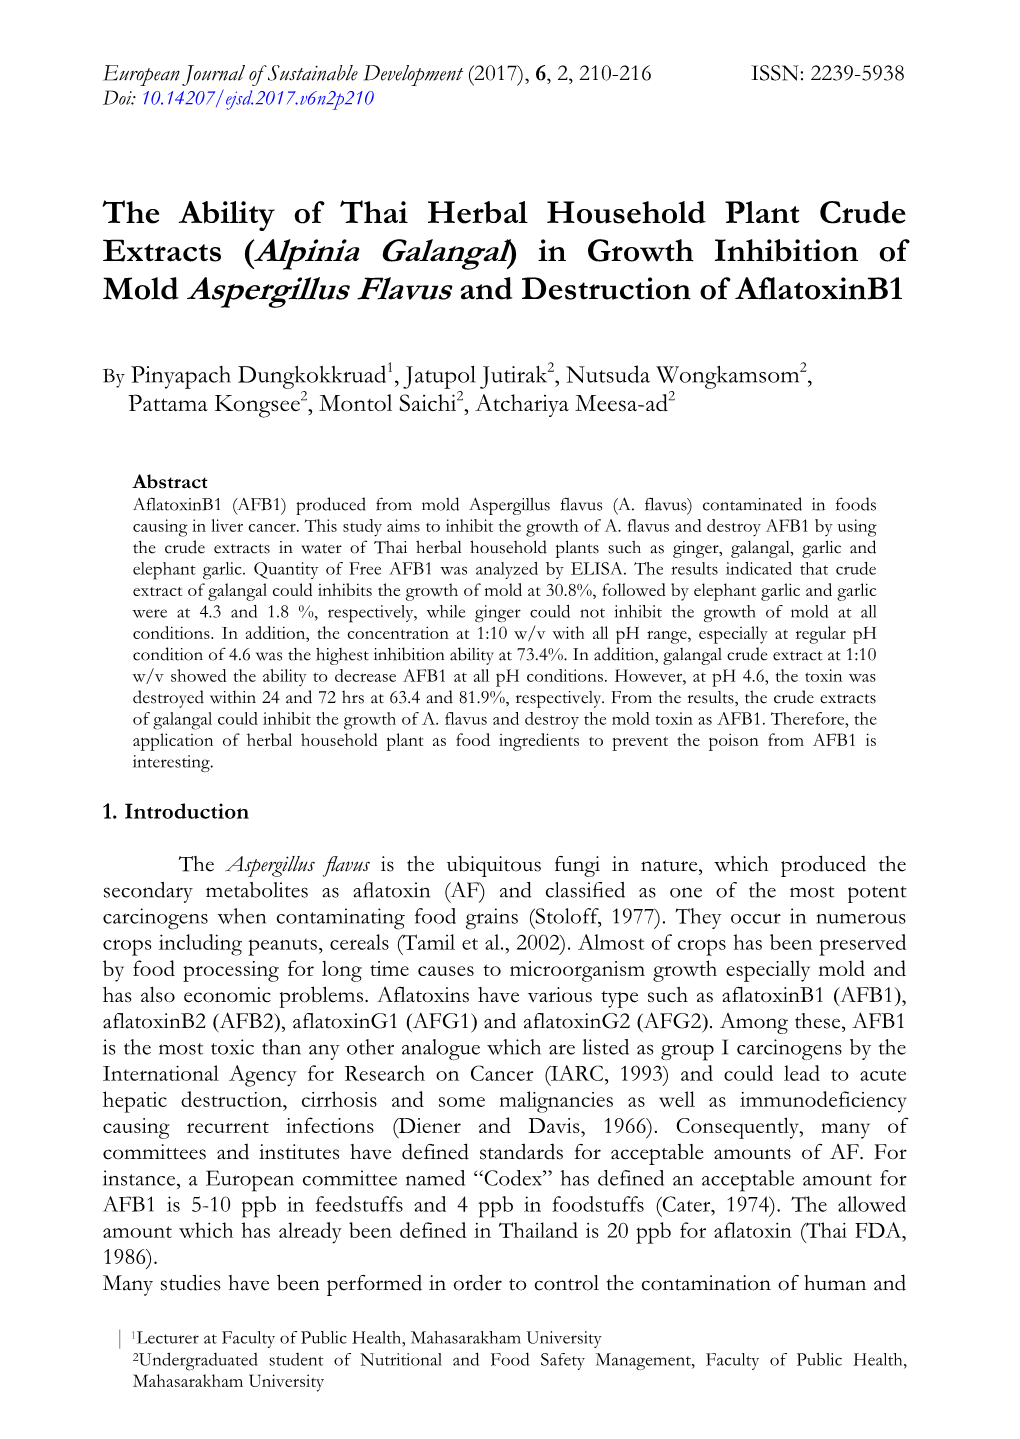 (Alpinia Galangal) in Growth Inhibition of Mold Aspergillus Flavus and Destruction of Aflatoxinb1